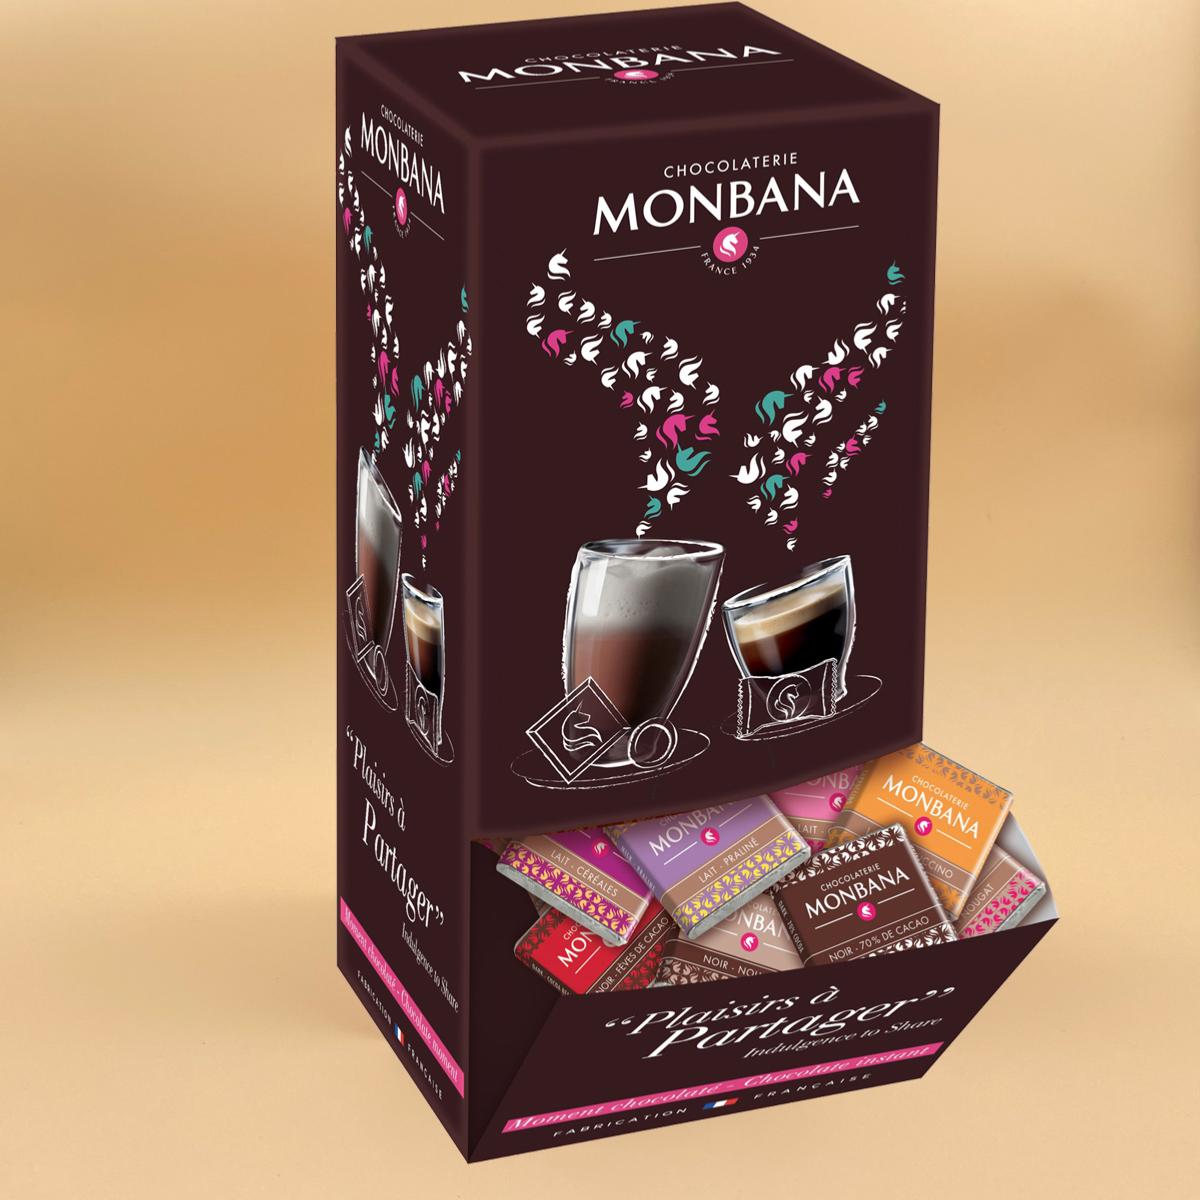 https://www.graindecafe.com/Files/16082/Img/12/carre-chocolat-200-monbana-1.jpg